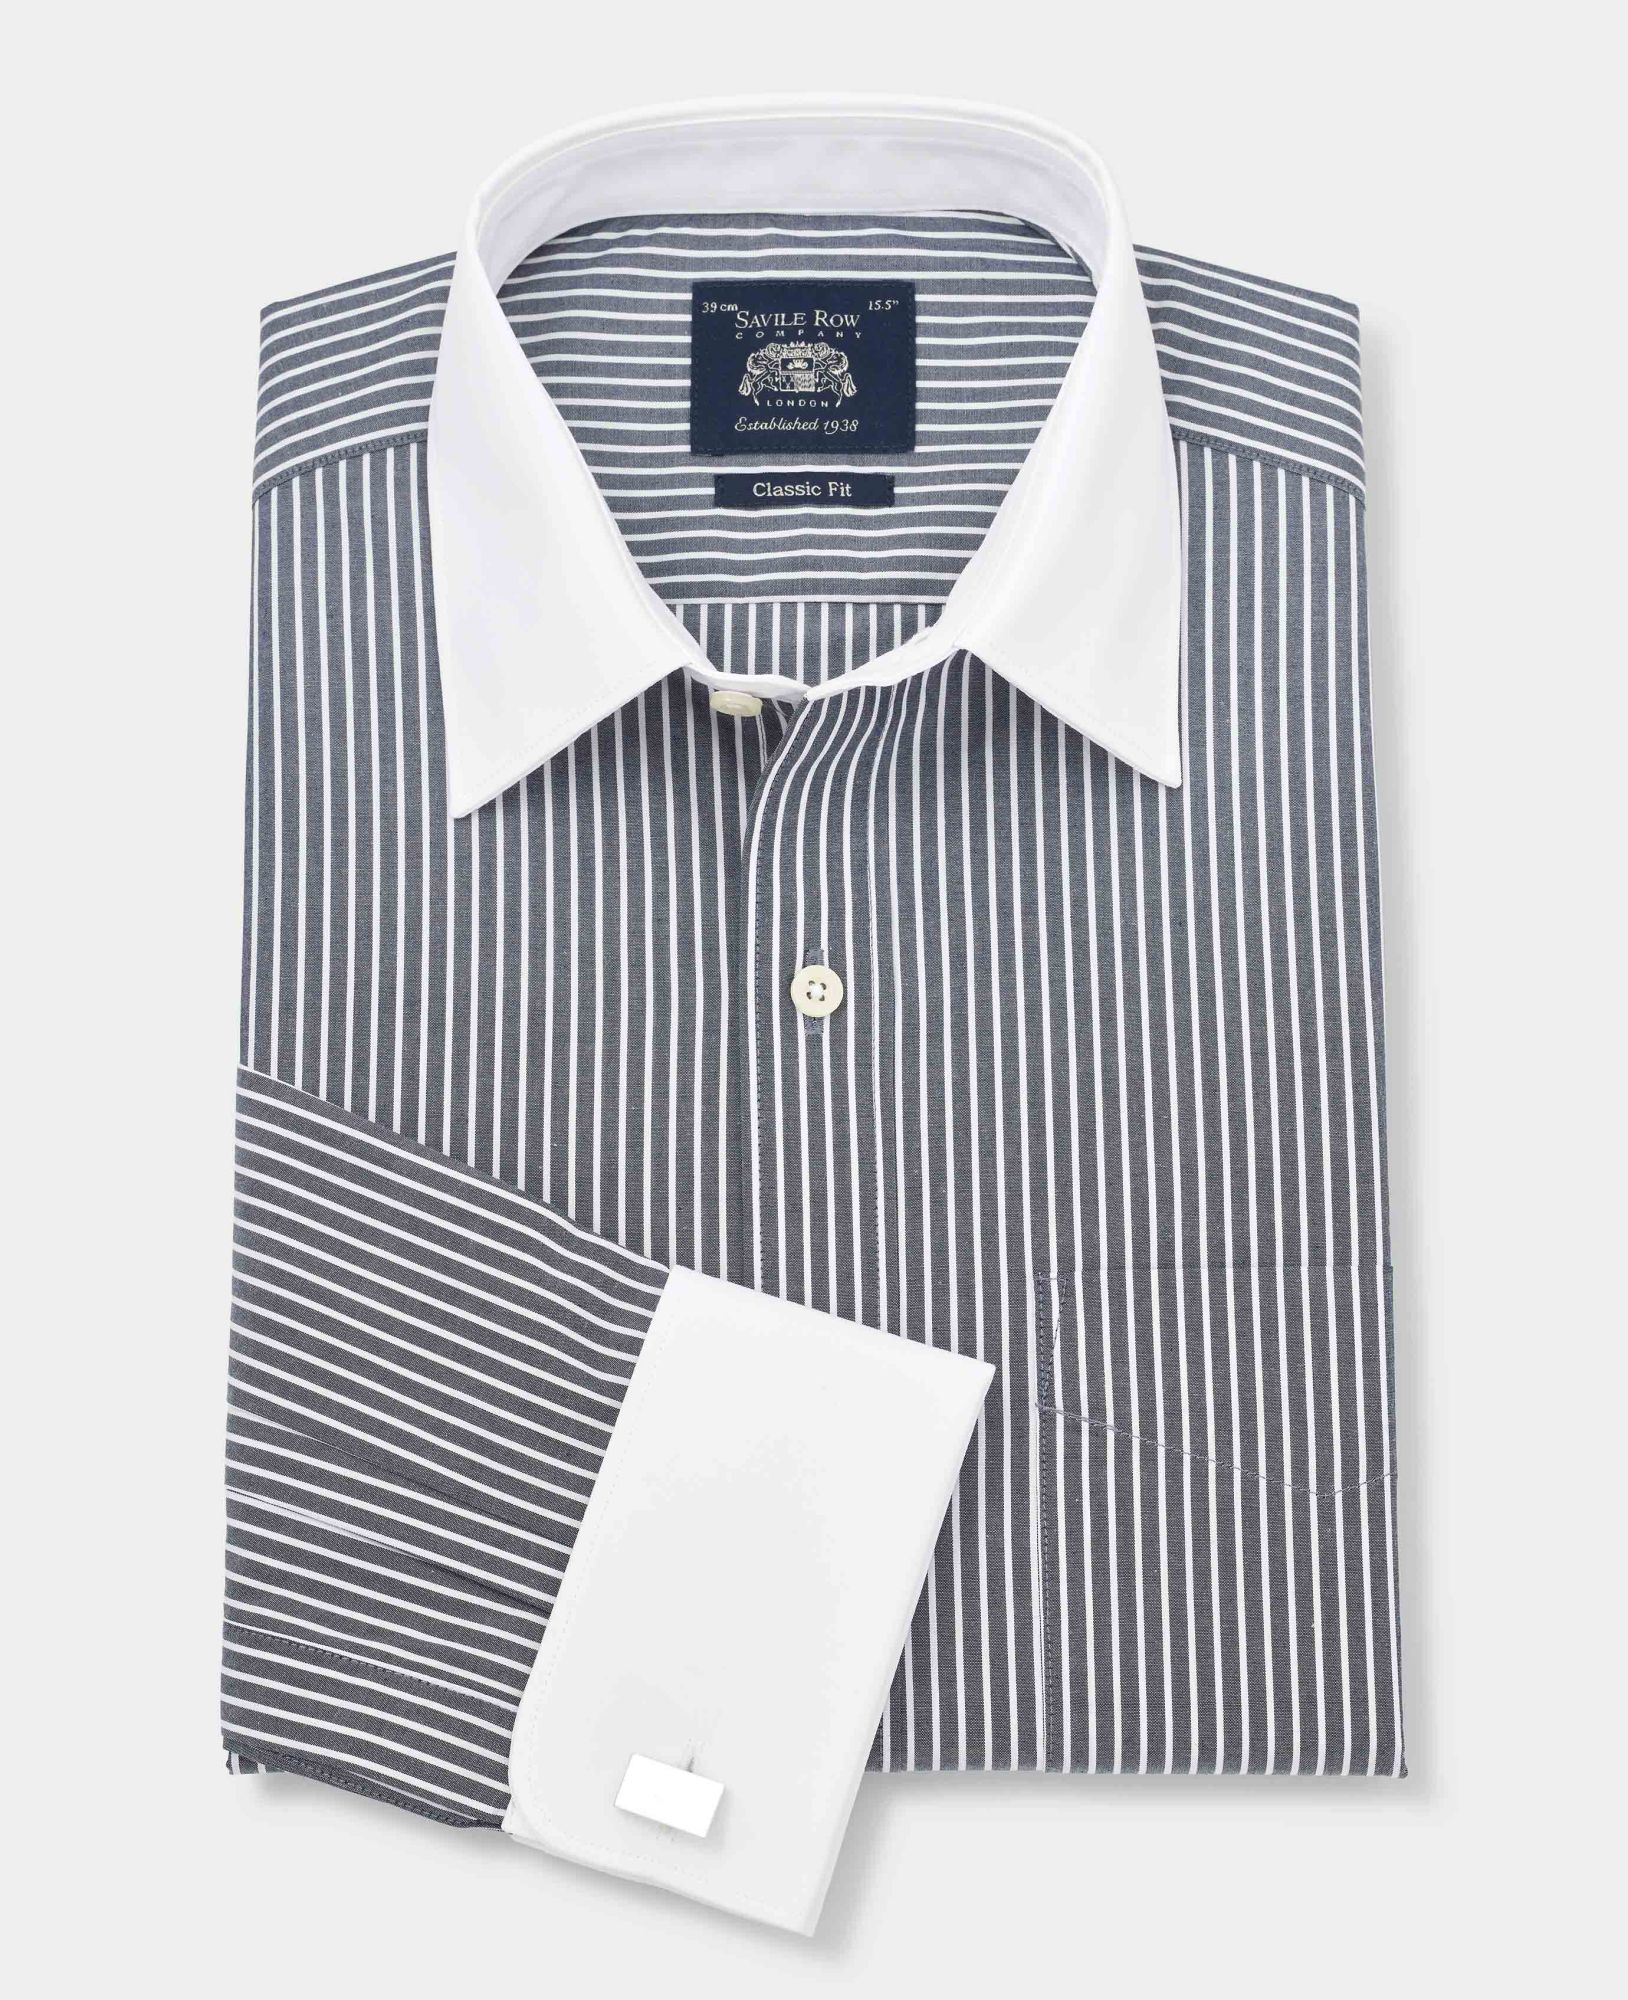 Black White Stripe Classic Fit Shirt With White Collar & Cuffs - Double Cuff 18